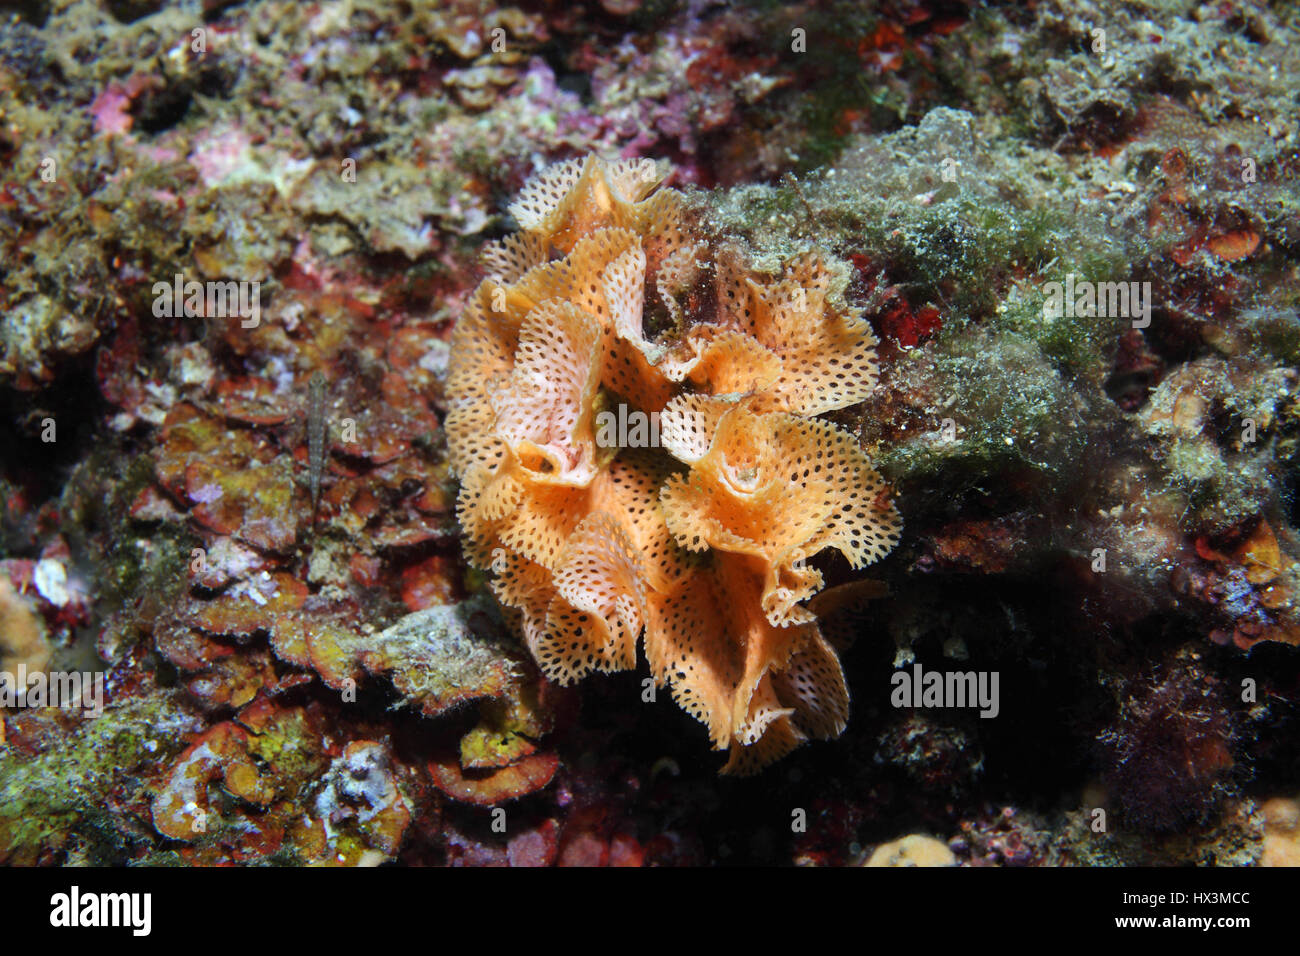 Moss animal (Reteporella grimaldii) underwater in the Mediterranean Sea Stock Photo